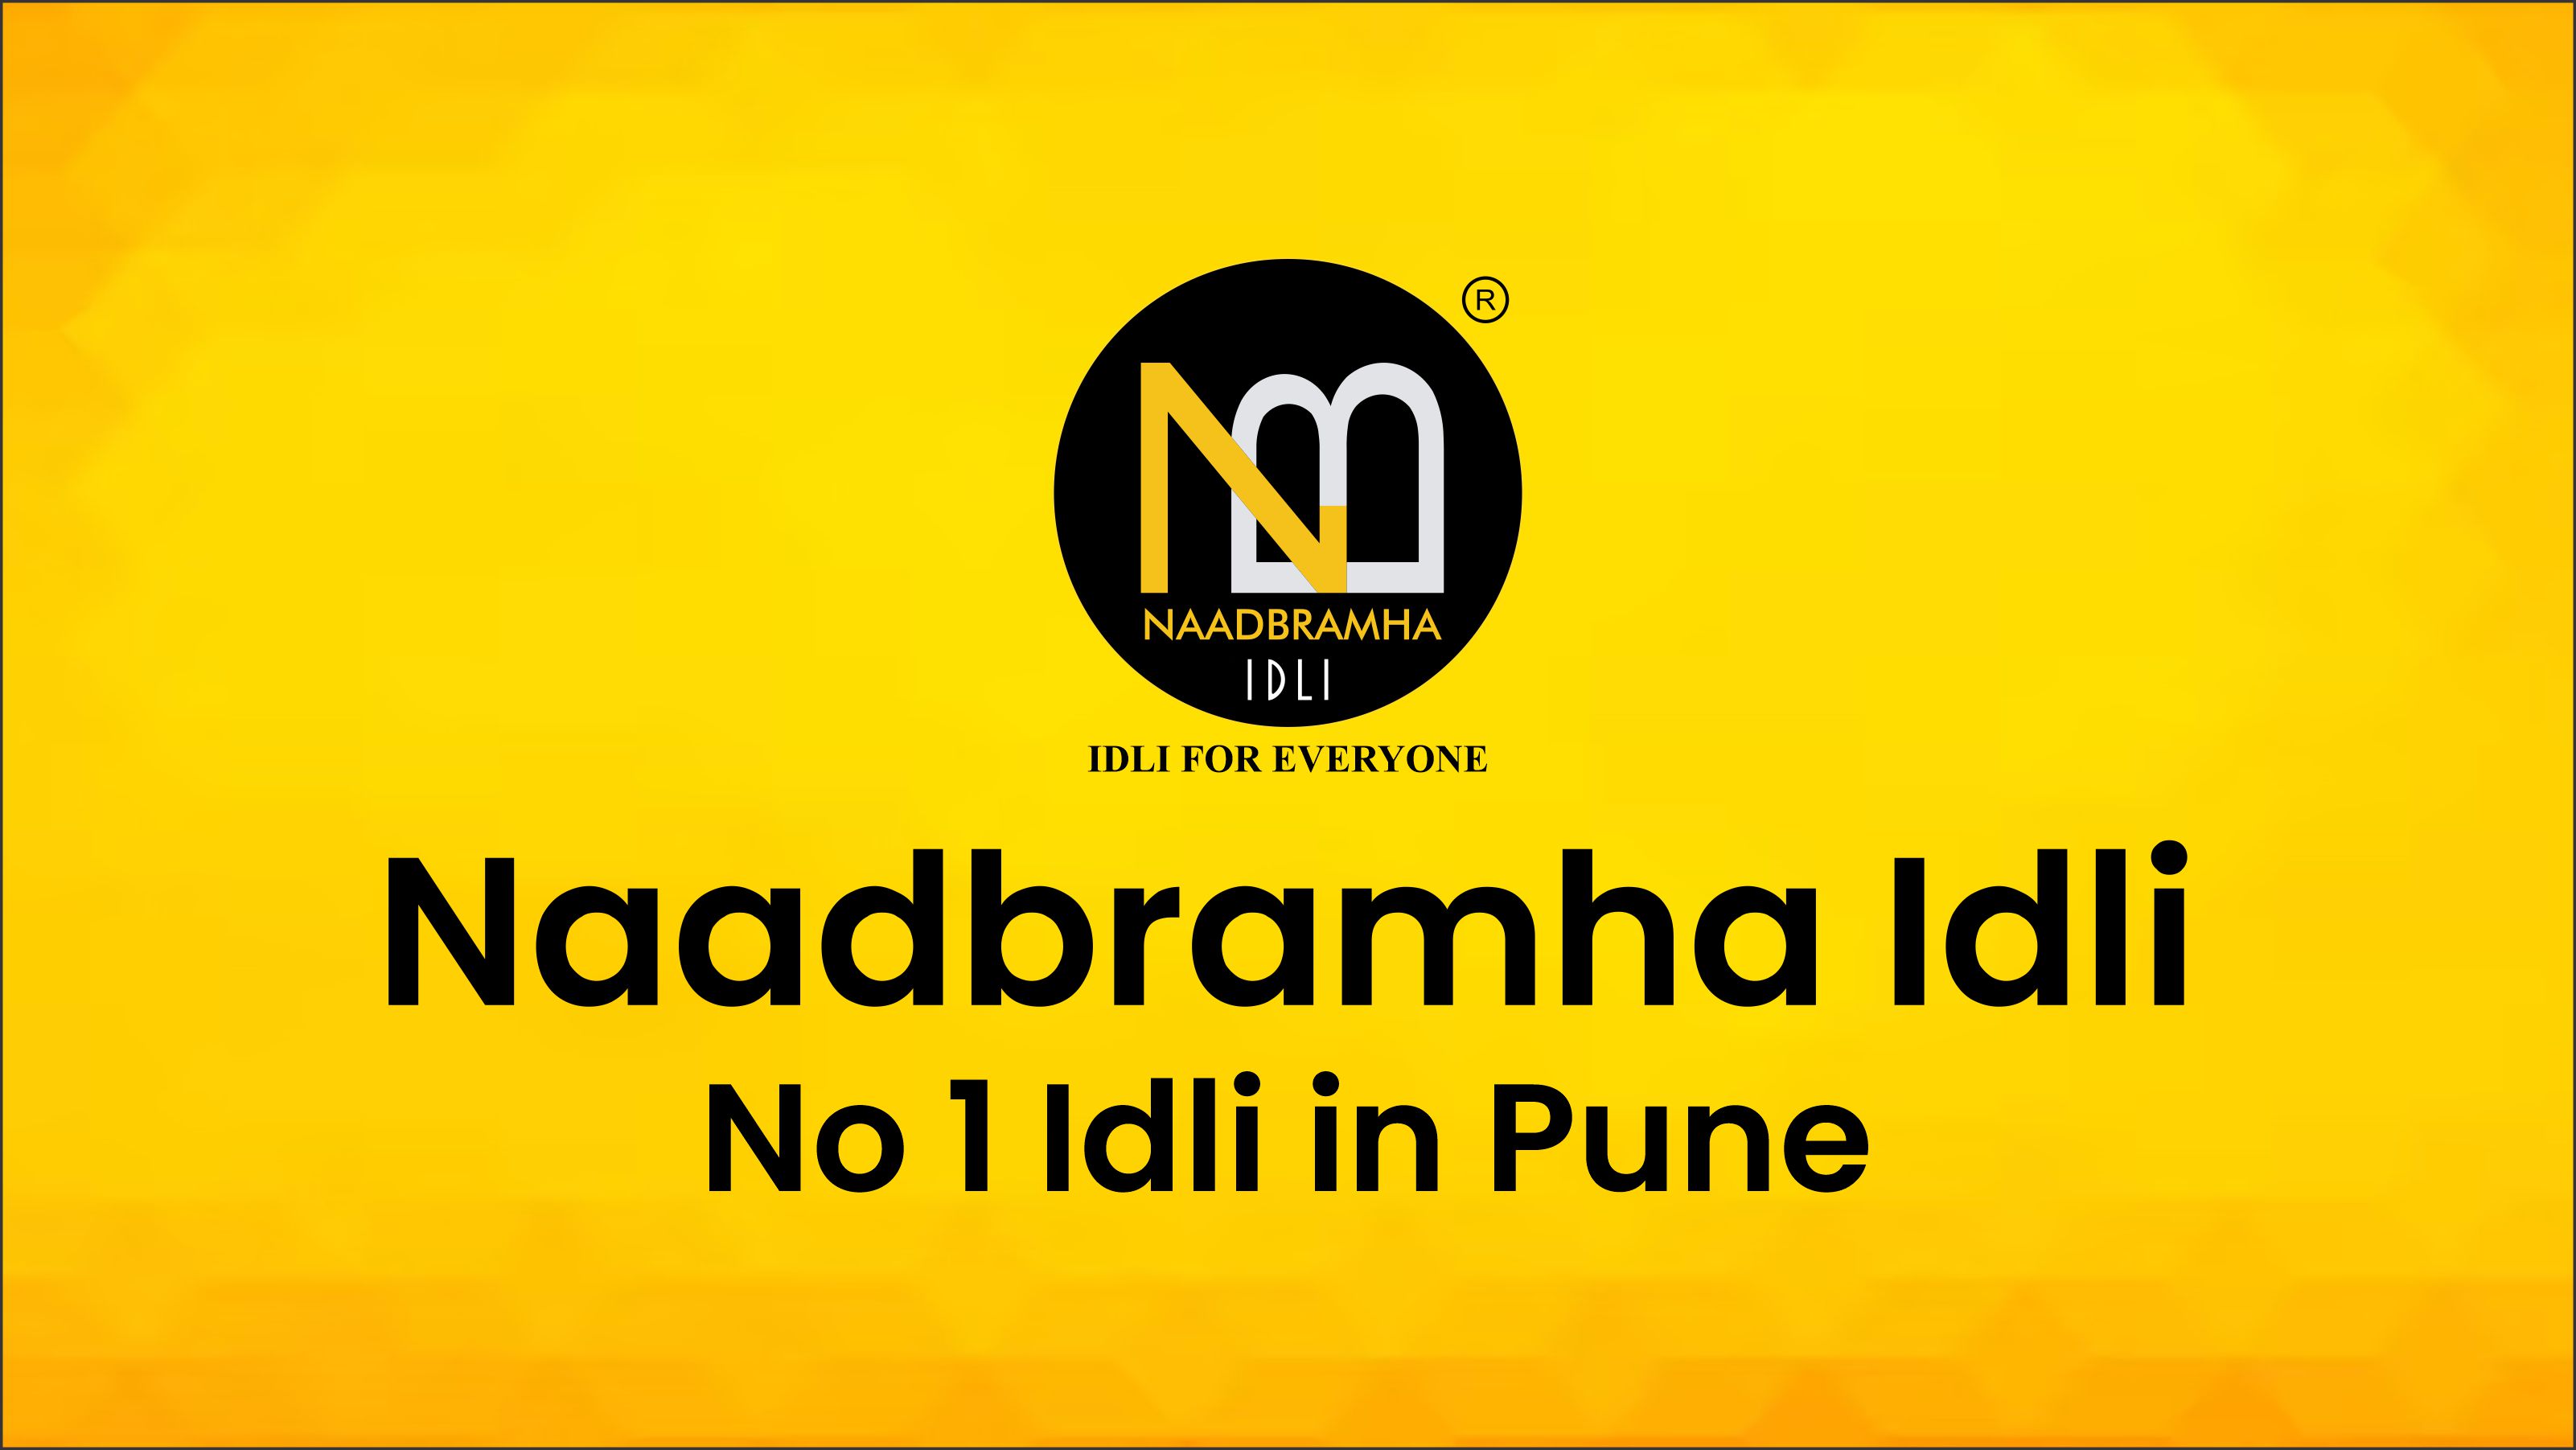 Naadbramha Idli – No 1 idli in Pune